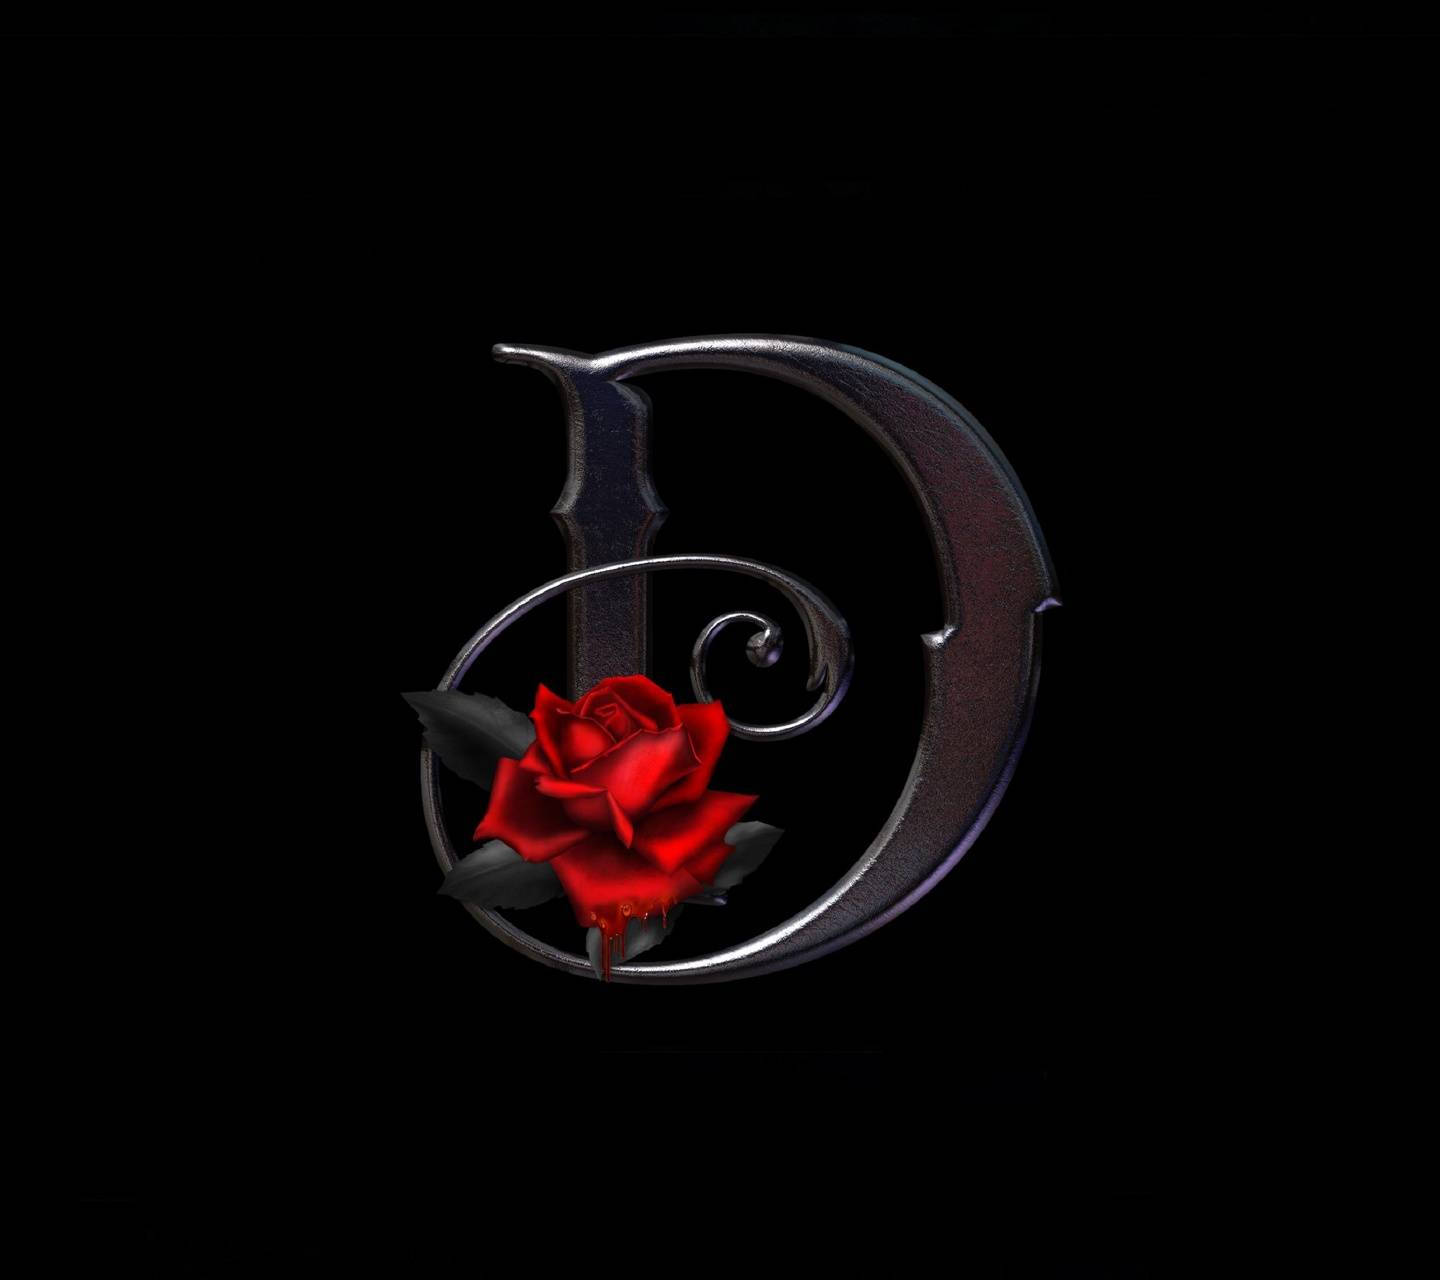 Caption: Enchanting Metallic D Emblem With A Rose Wallpaper